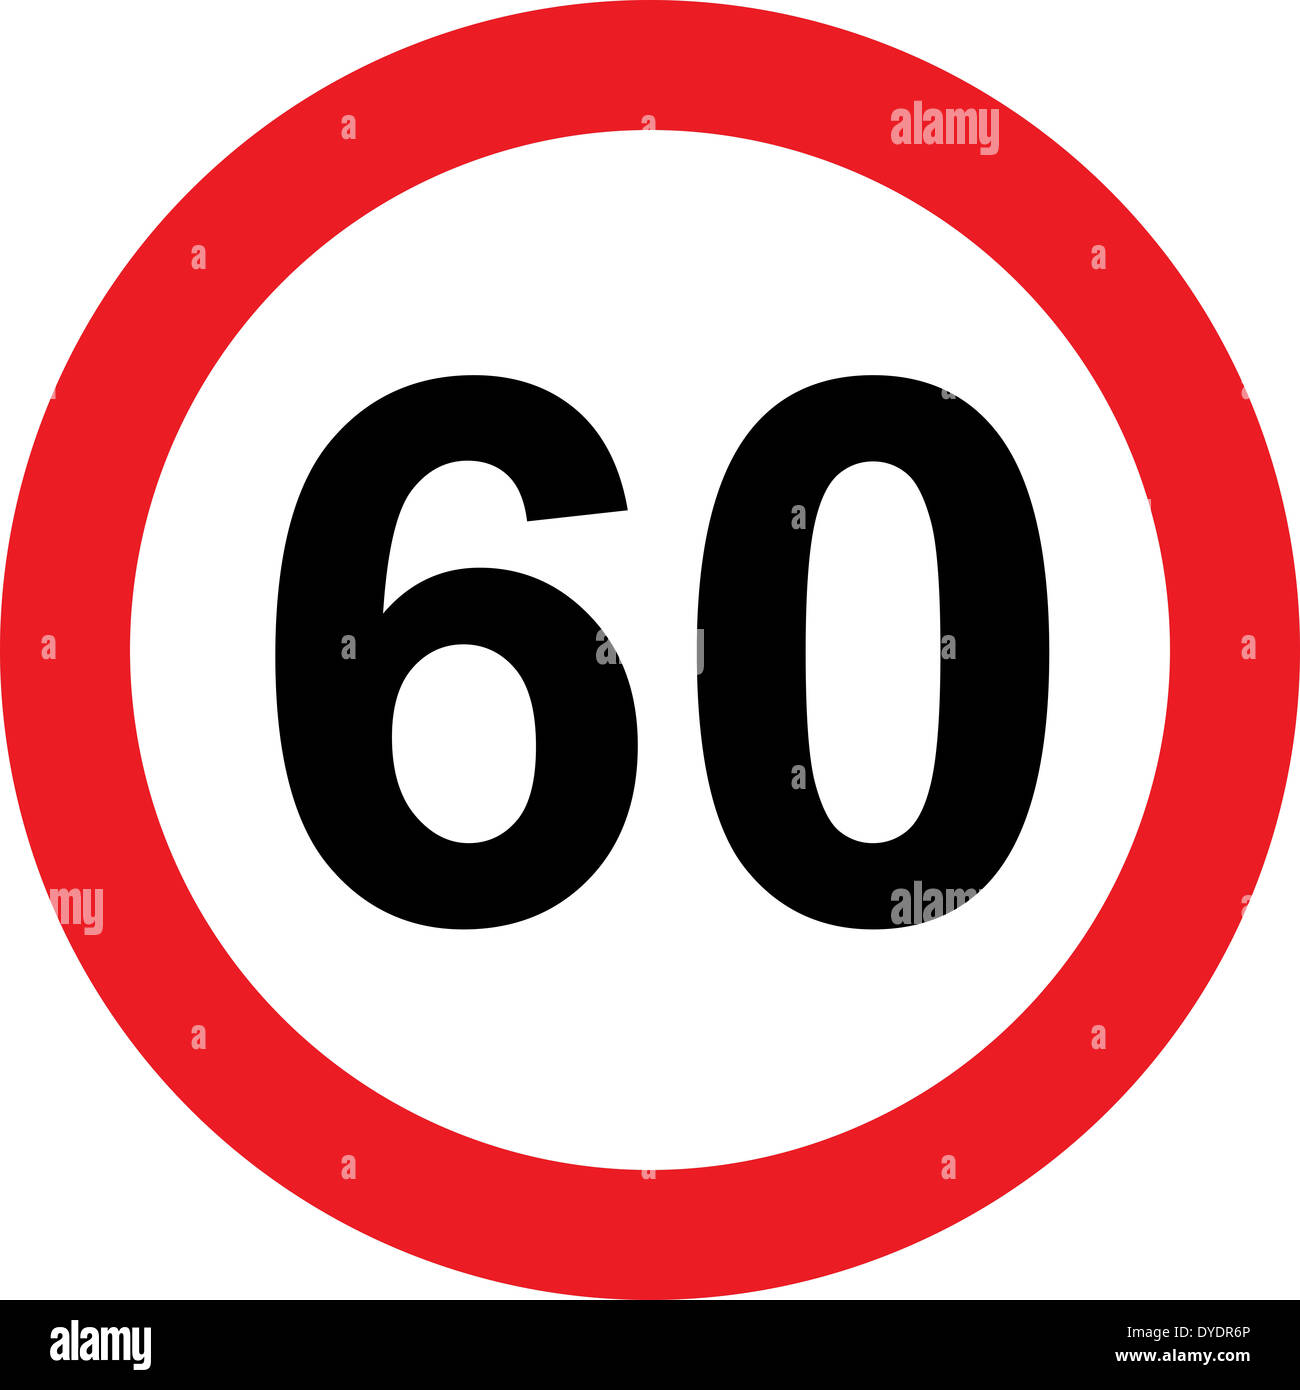 60 speed limitation road sign on white background Stock Photo